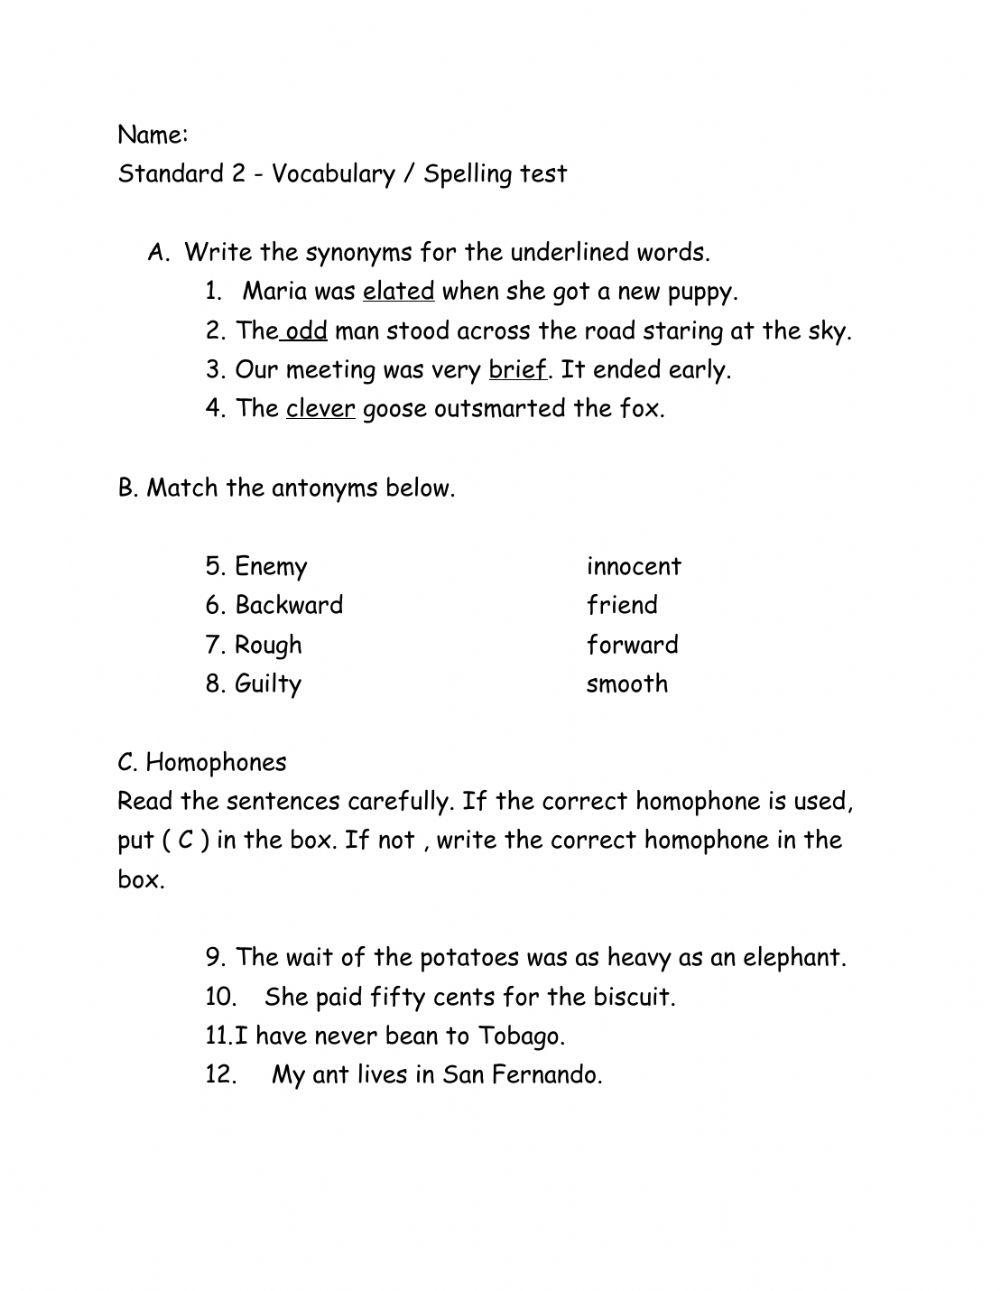 Vocabulary test